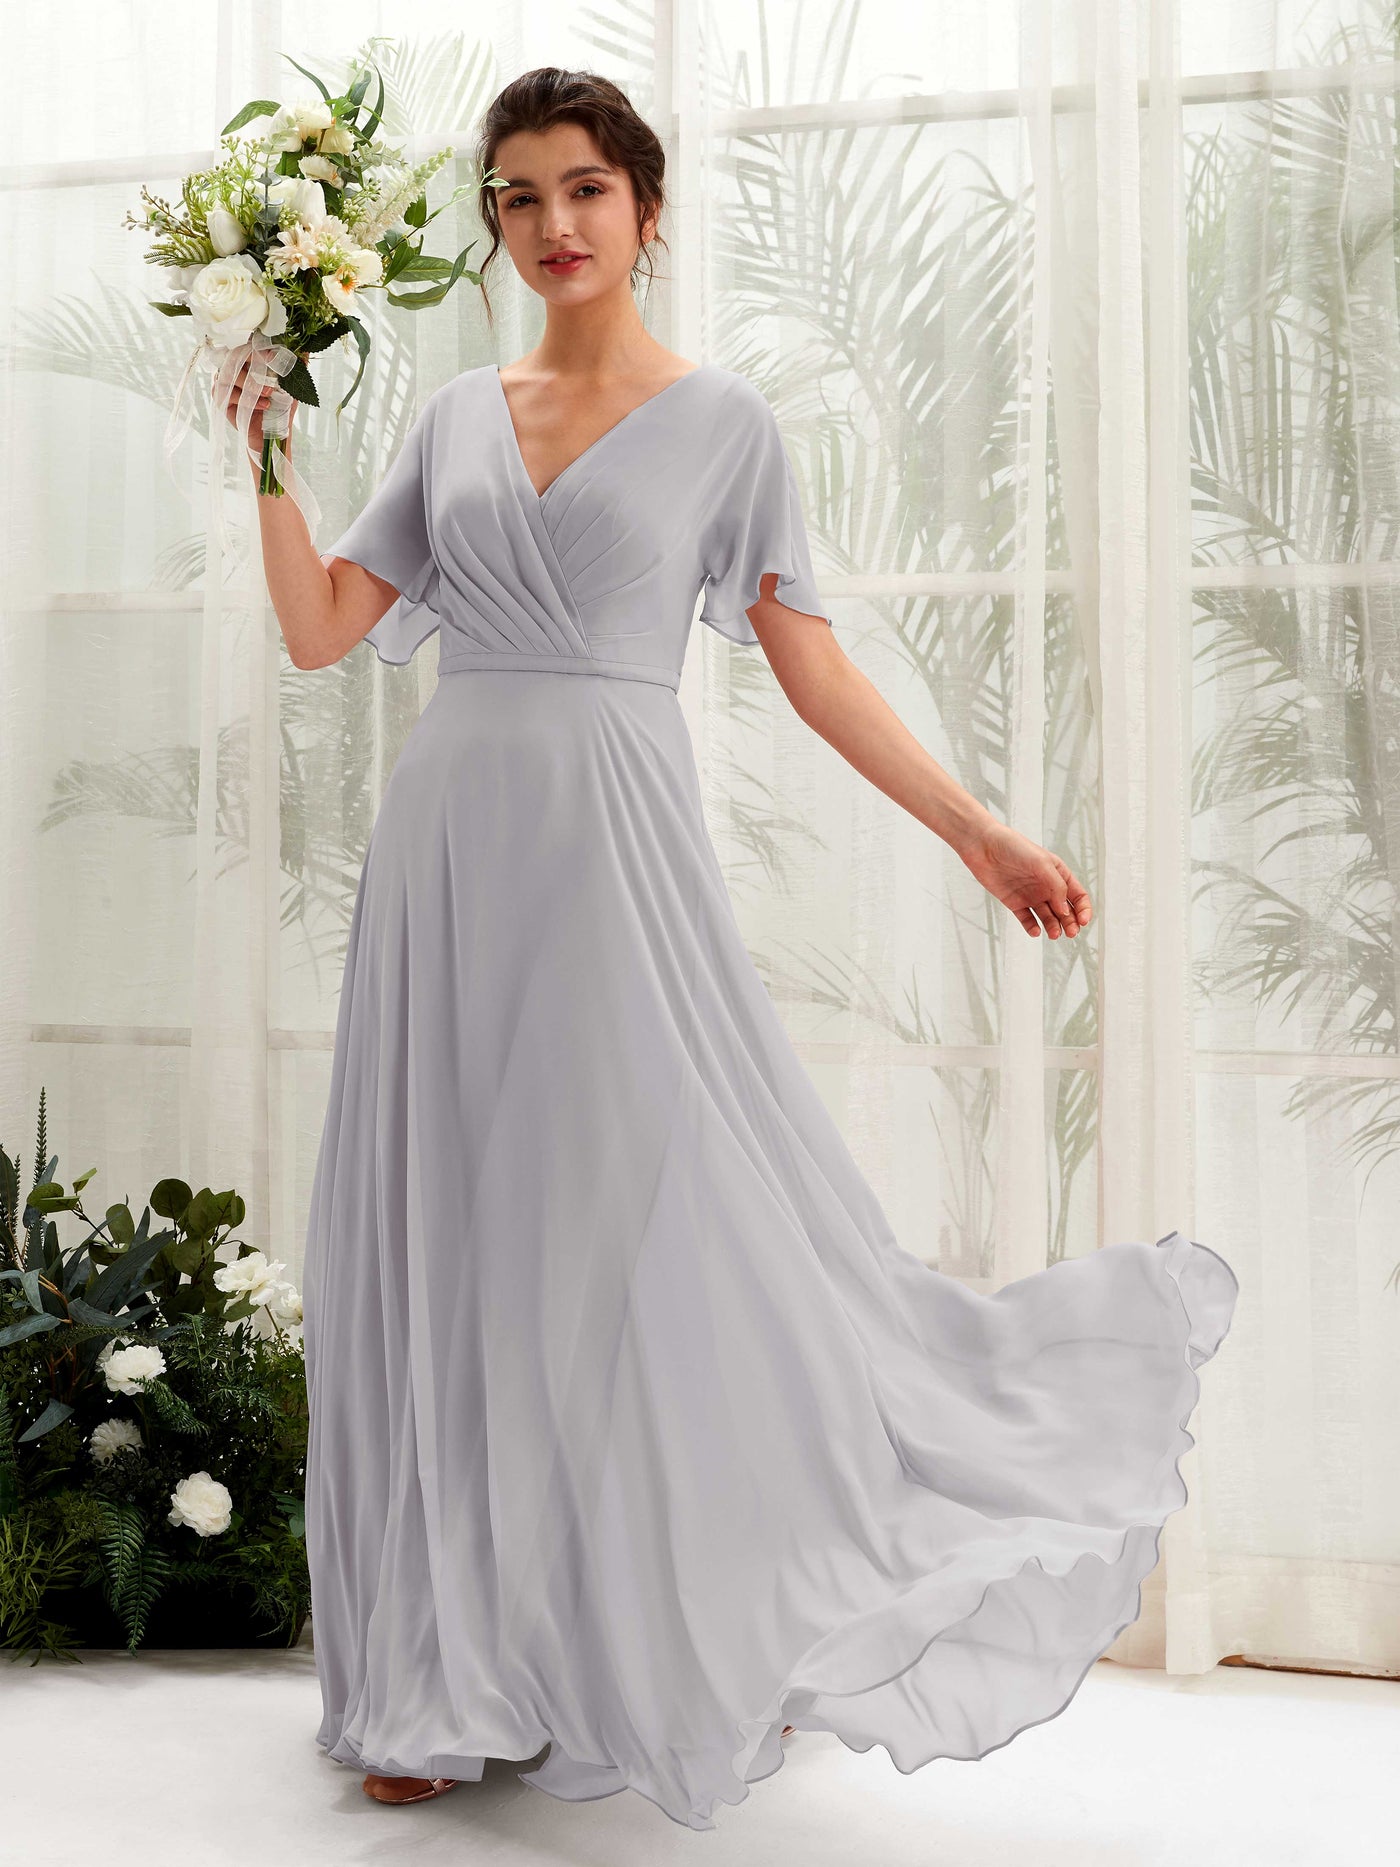 Dove Bridesmaid Dresses Bridesmaid Dress A-line Chiffon V-neck Full Length Short Sleeves Wedding Party Dress (81224625)#color_dove